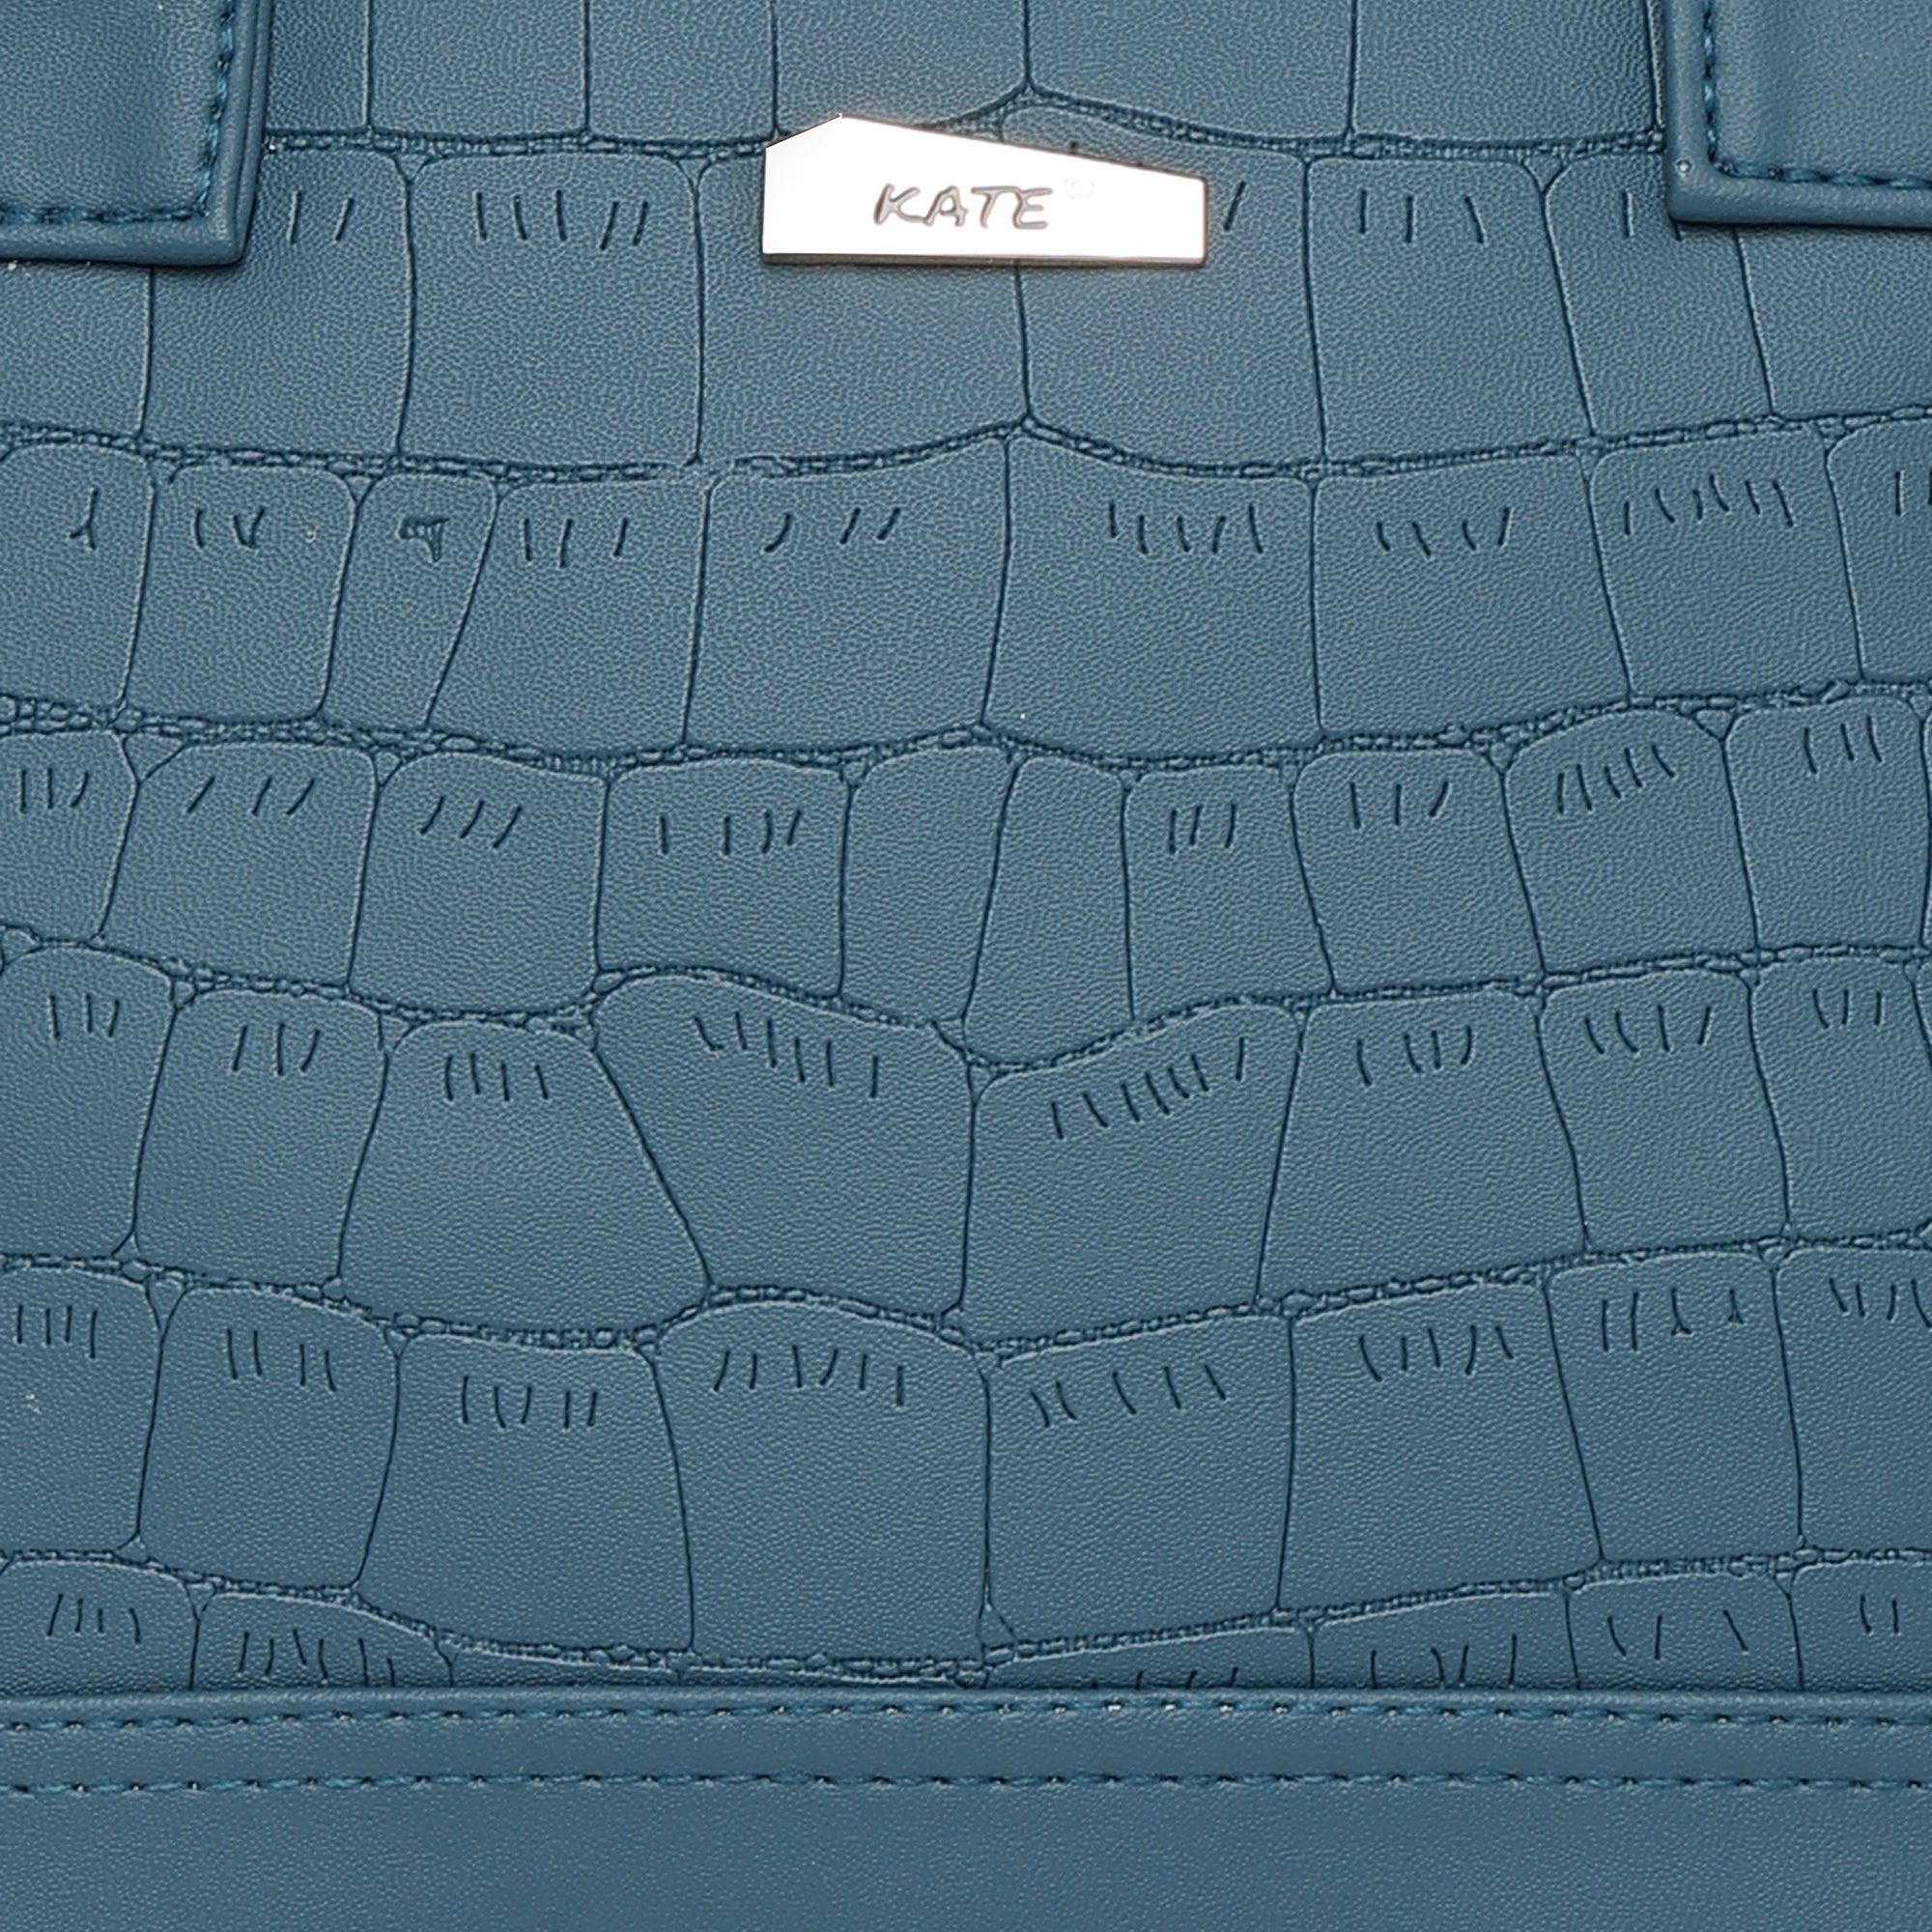 Teal Blue Women Vegan Leather Handbag With Belt